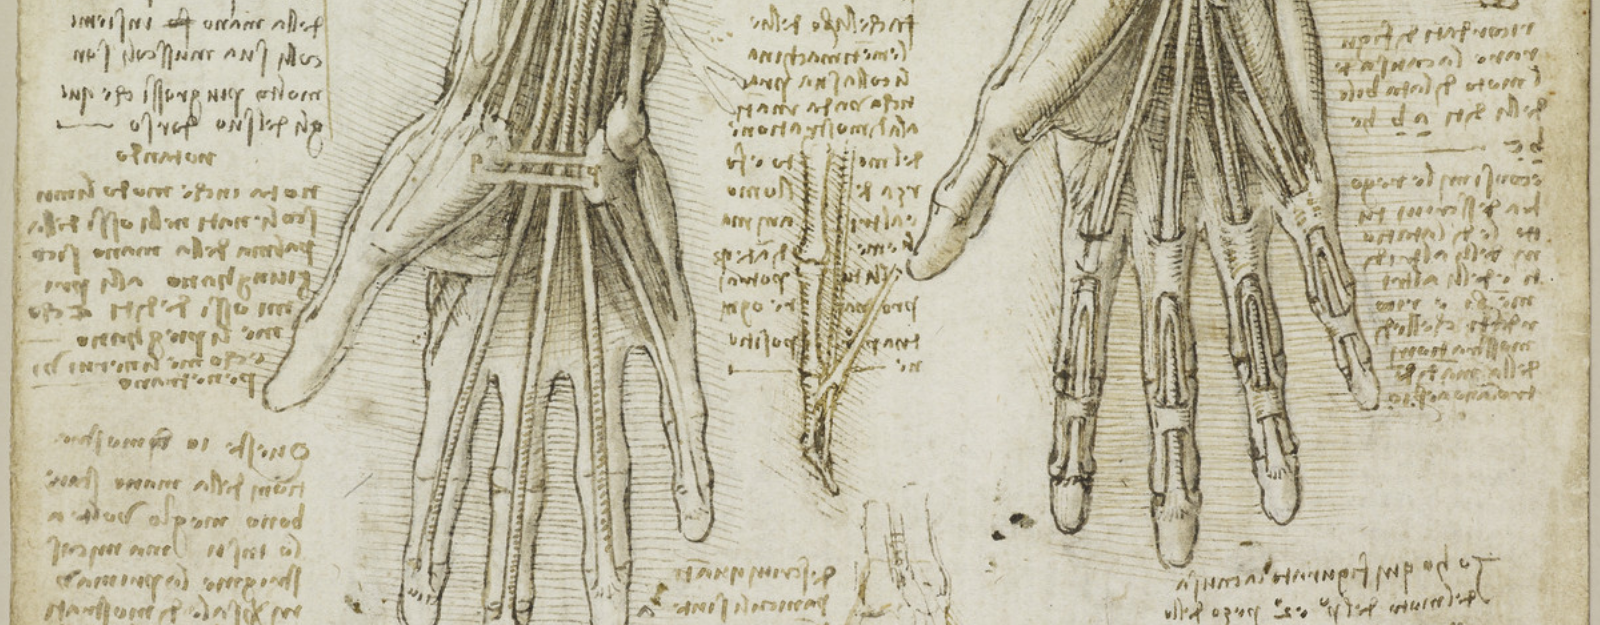 drawing of hands by Leonardo da Vinci